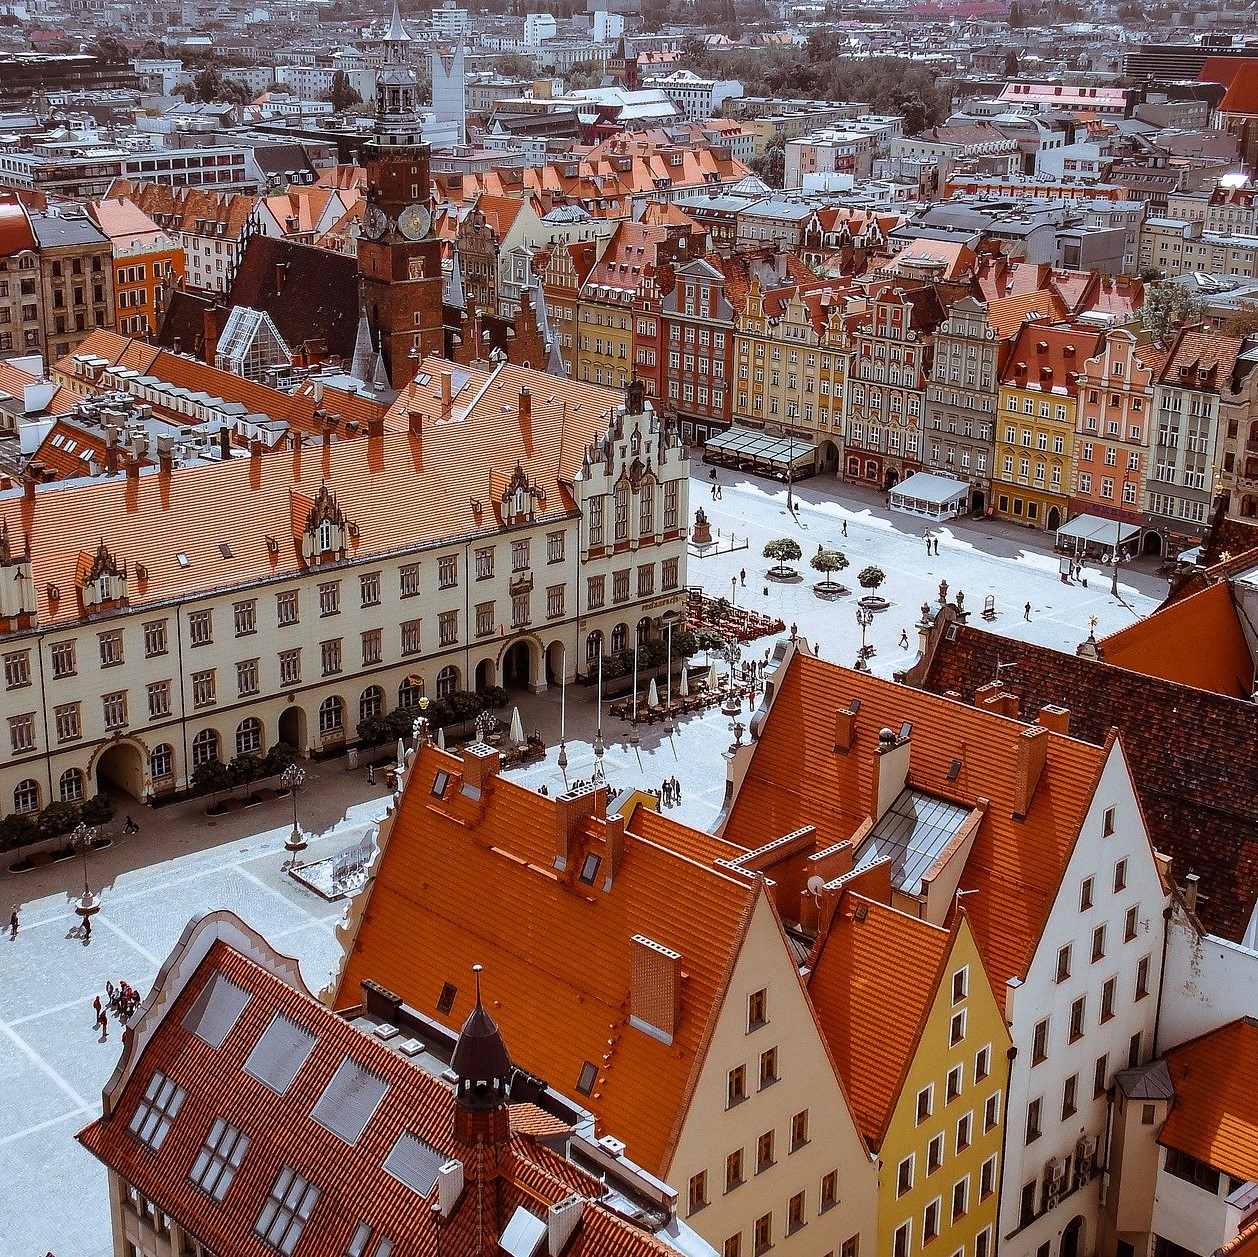 Poland is still gaining popularity as a study destination.